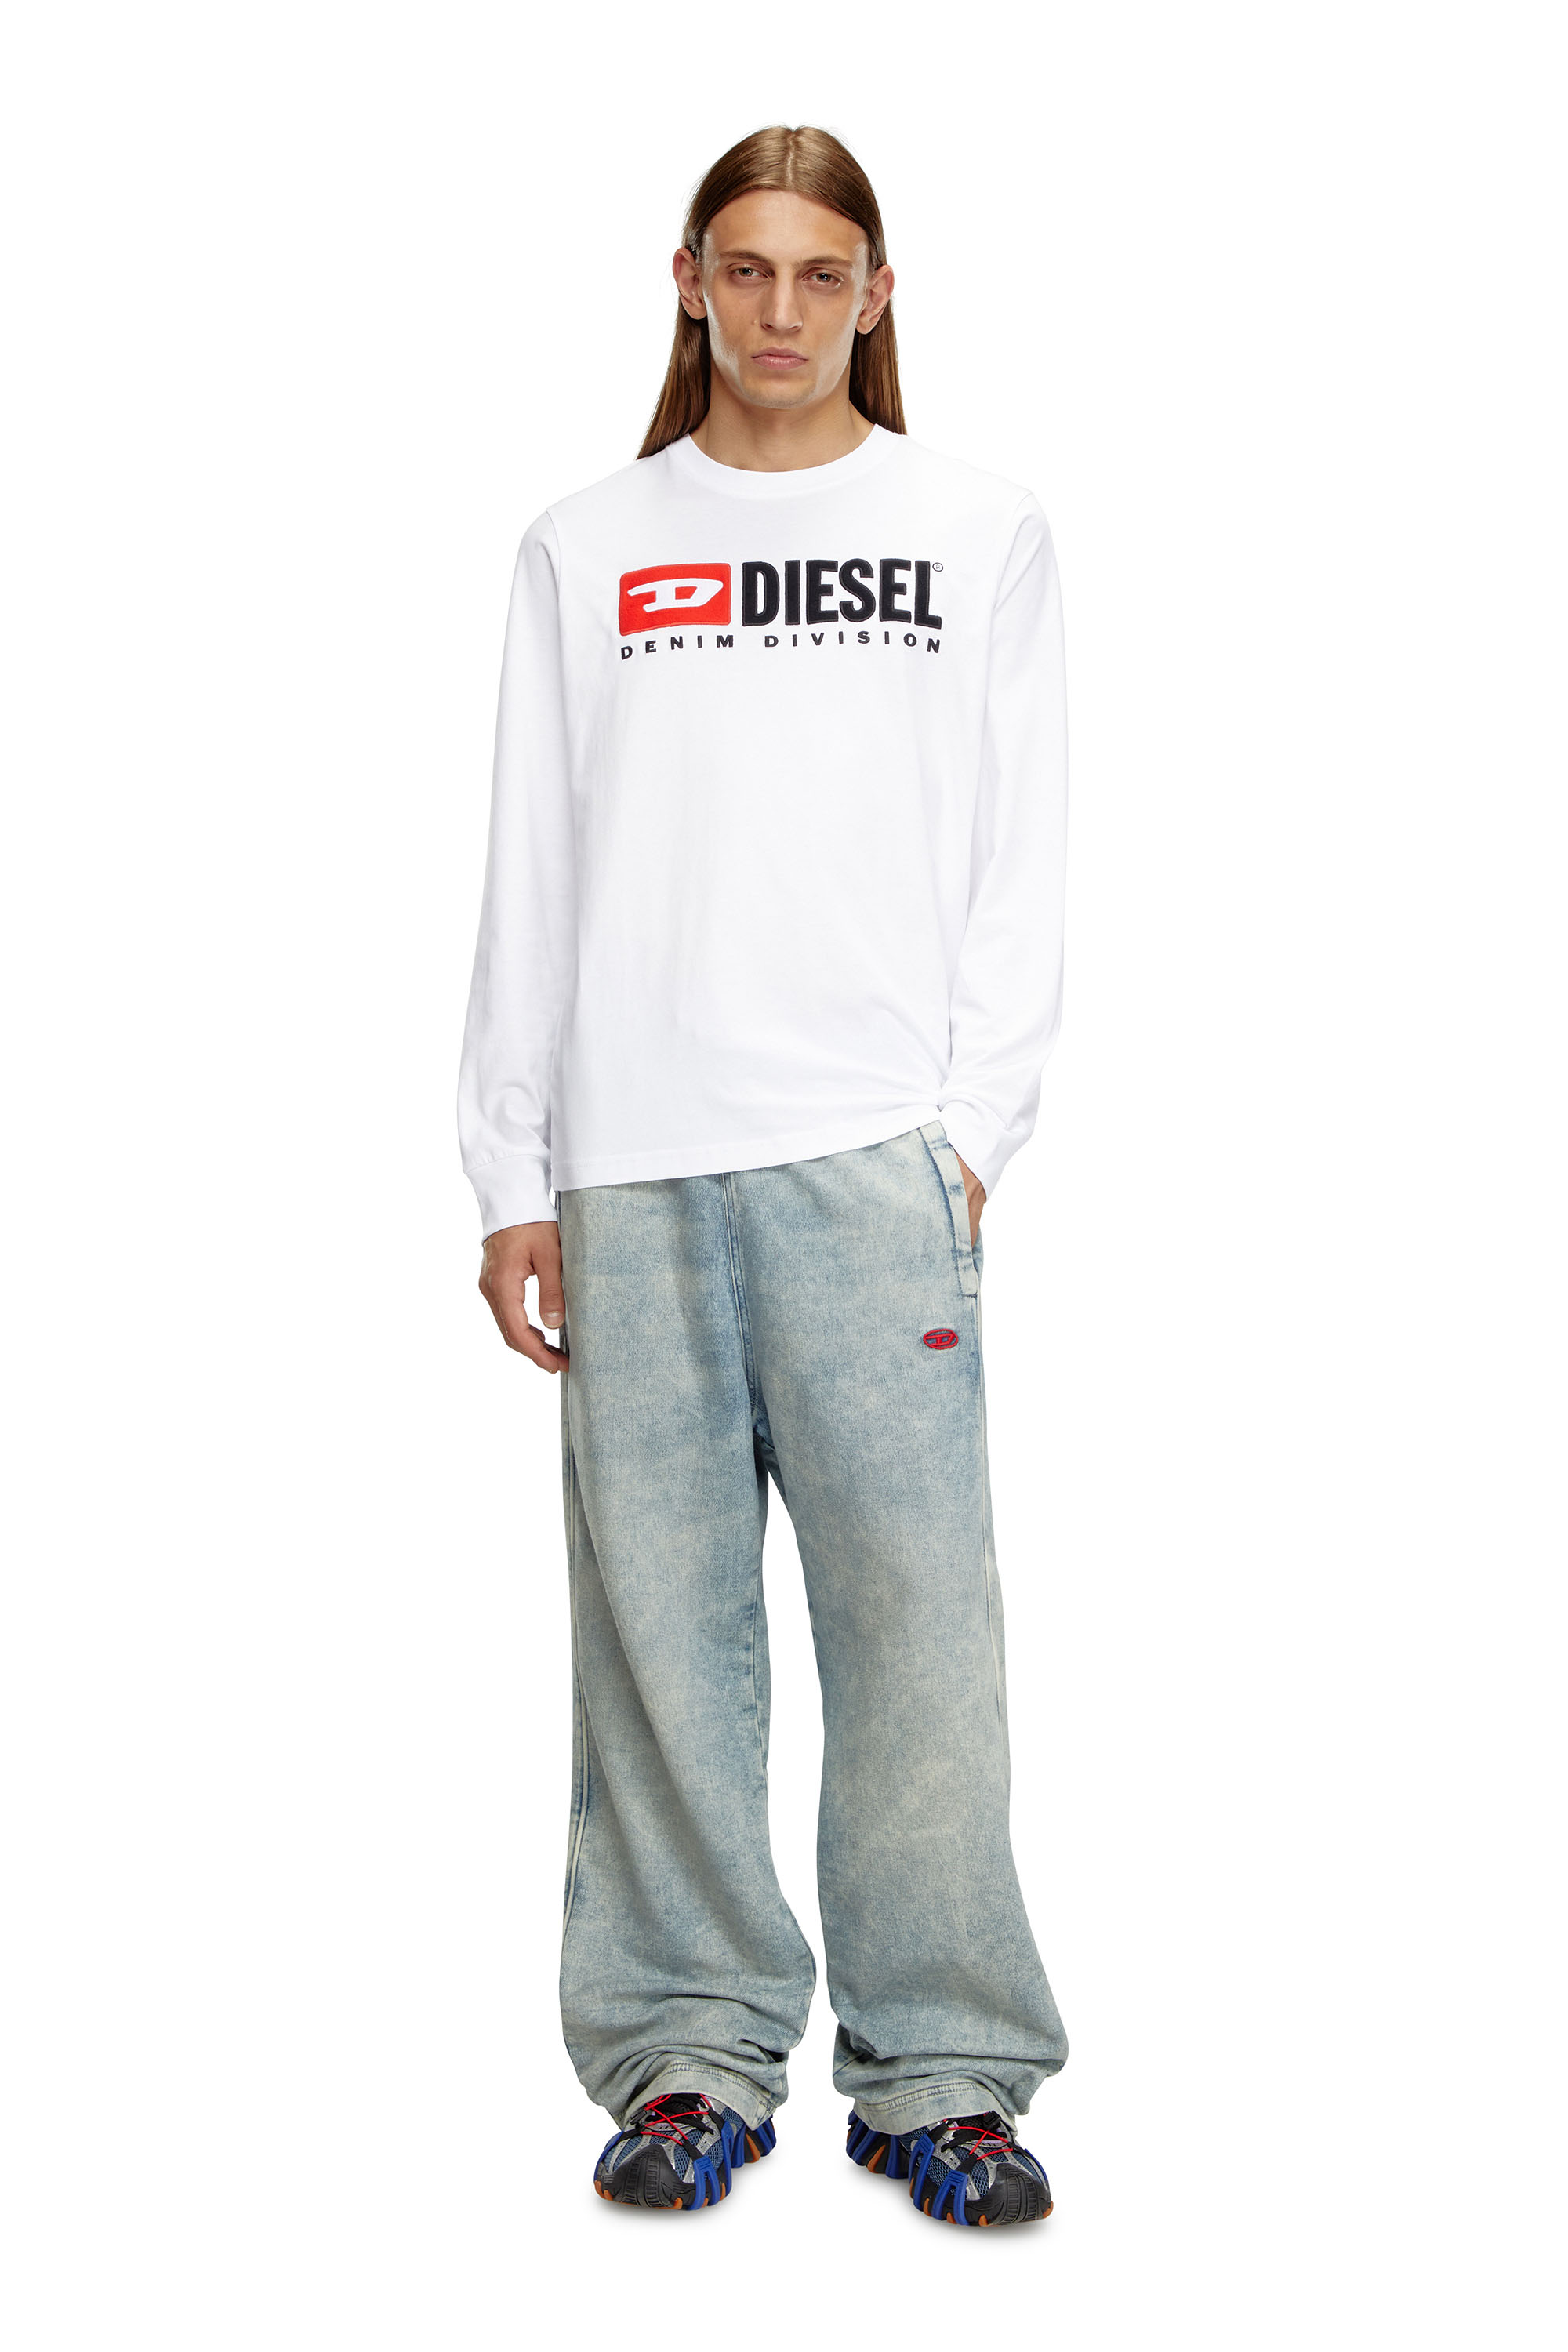 Diesel - T-JUST-LS-DIV, Hombre Camiseta de manga larga con bordado in Blanco - Image 2